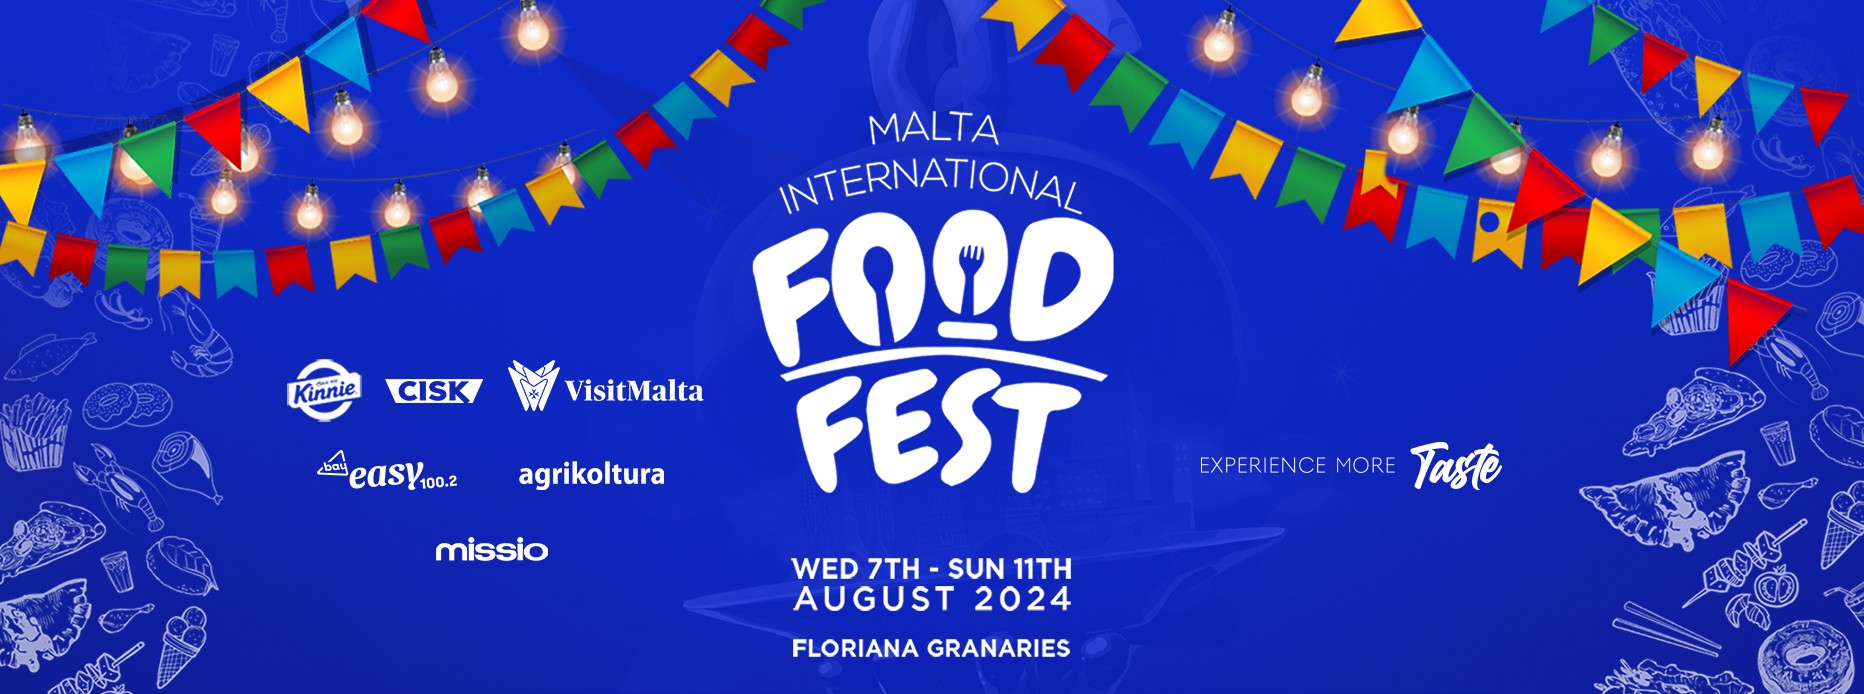 Malta International Food Festival 2024